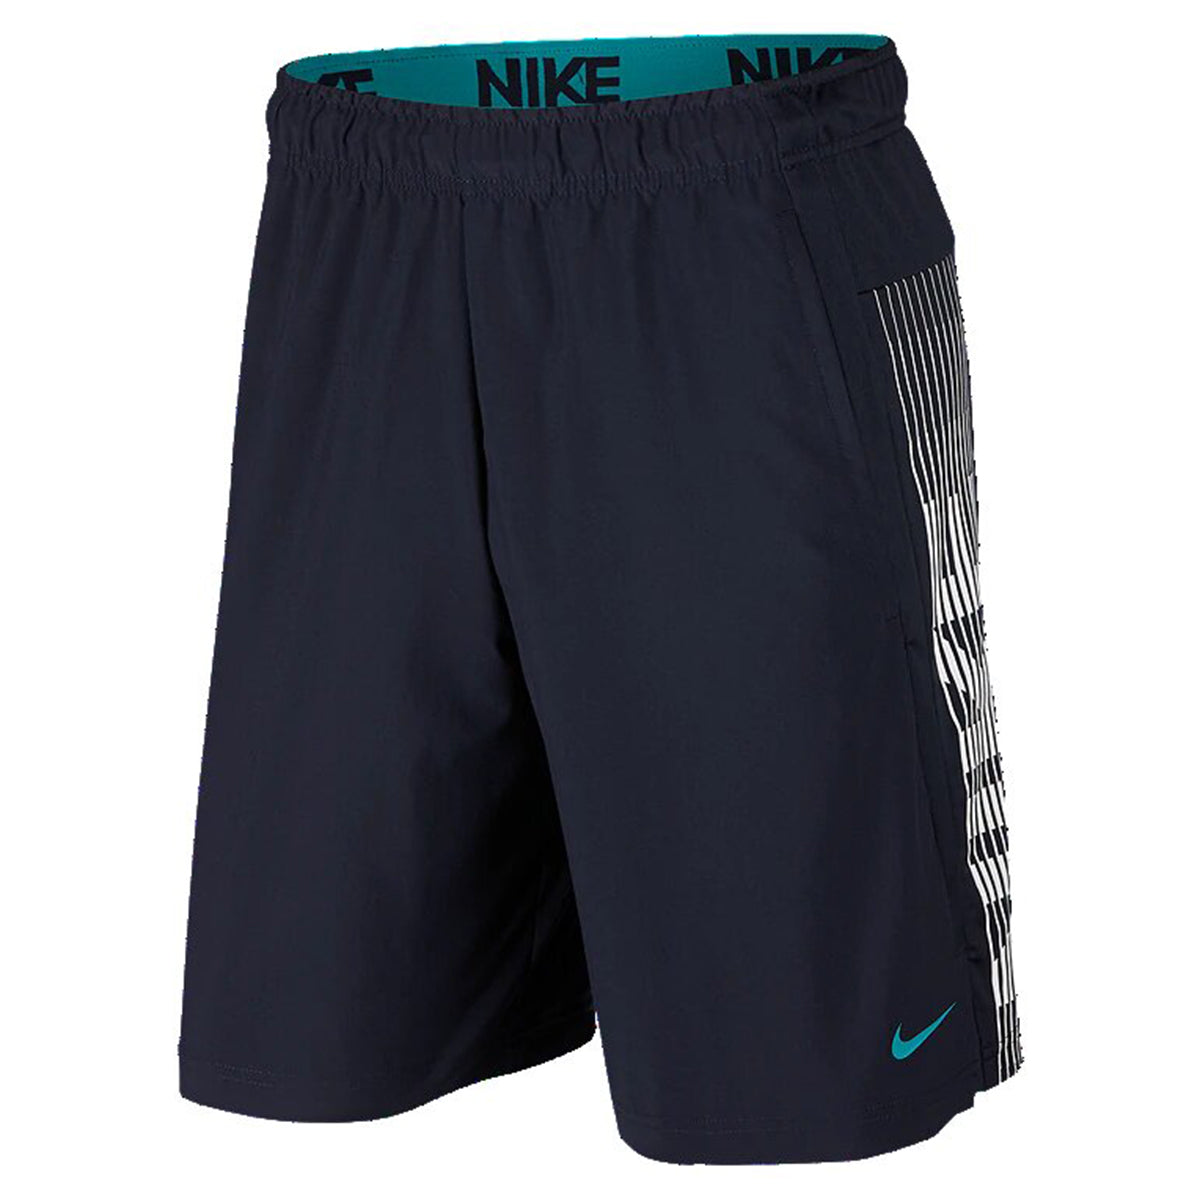 Nike Dry Training Shorts Mens Style : Aq0451-451